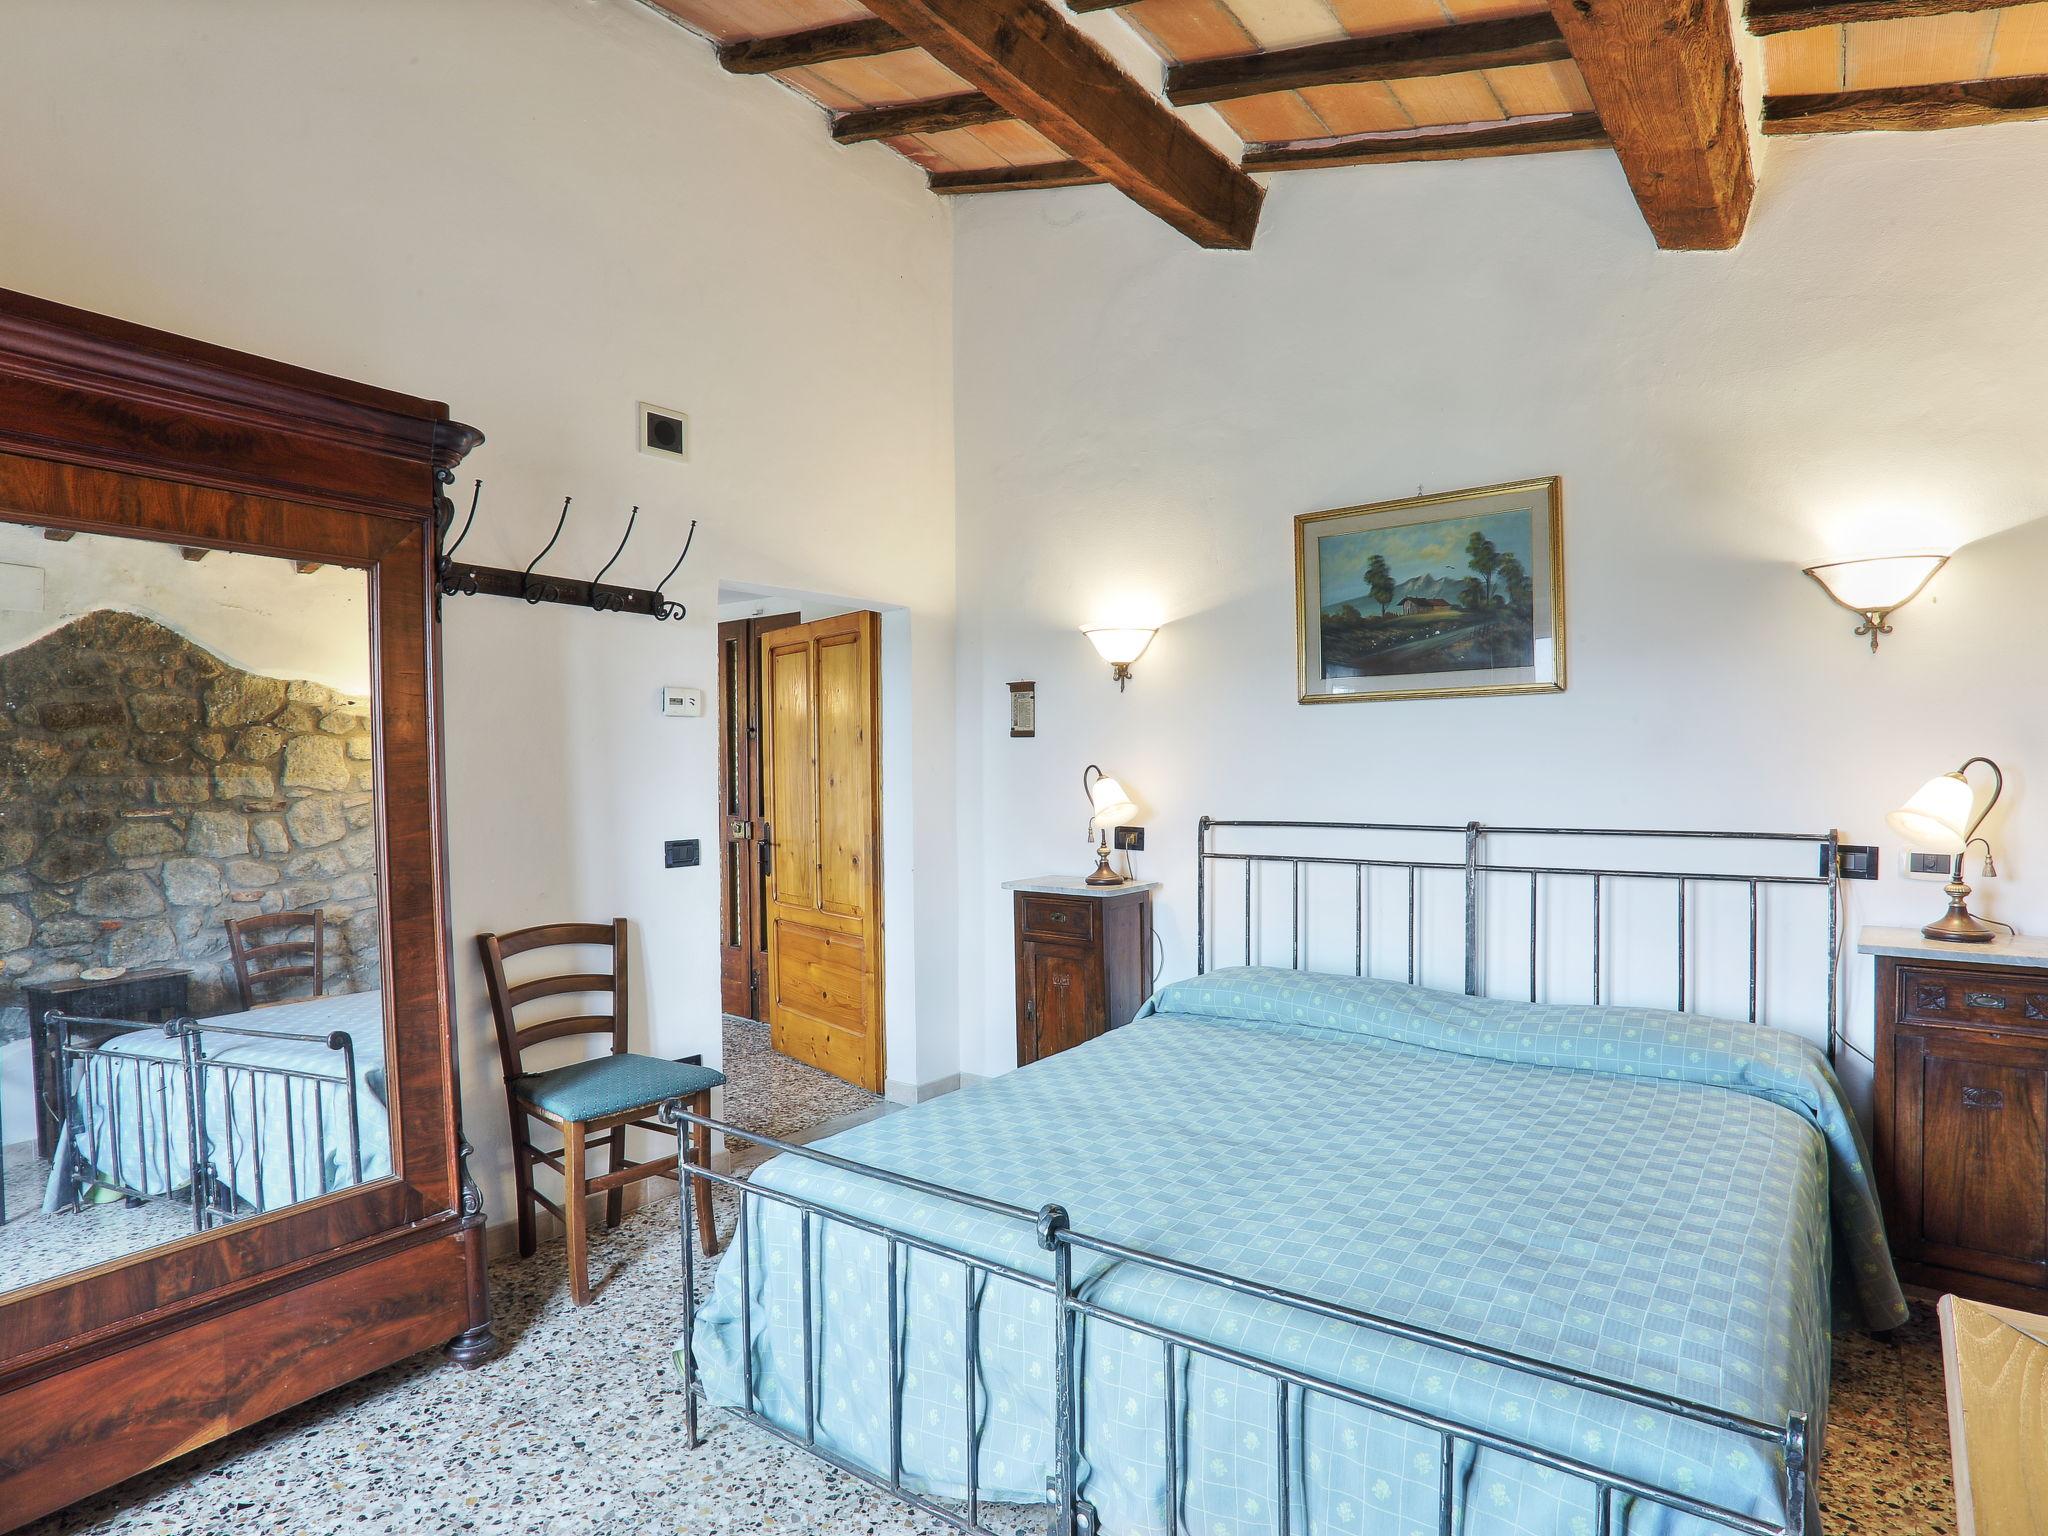 Photo 11 - Maison de 3 chambres à Roccastrada avec piscine privée